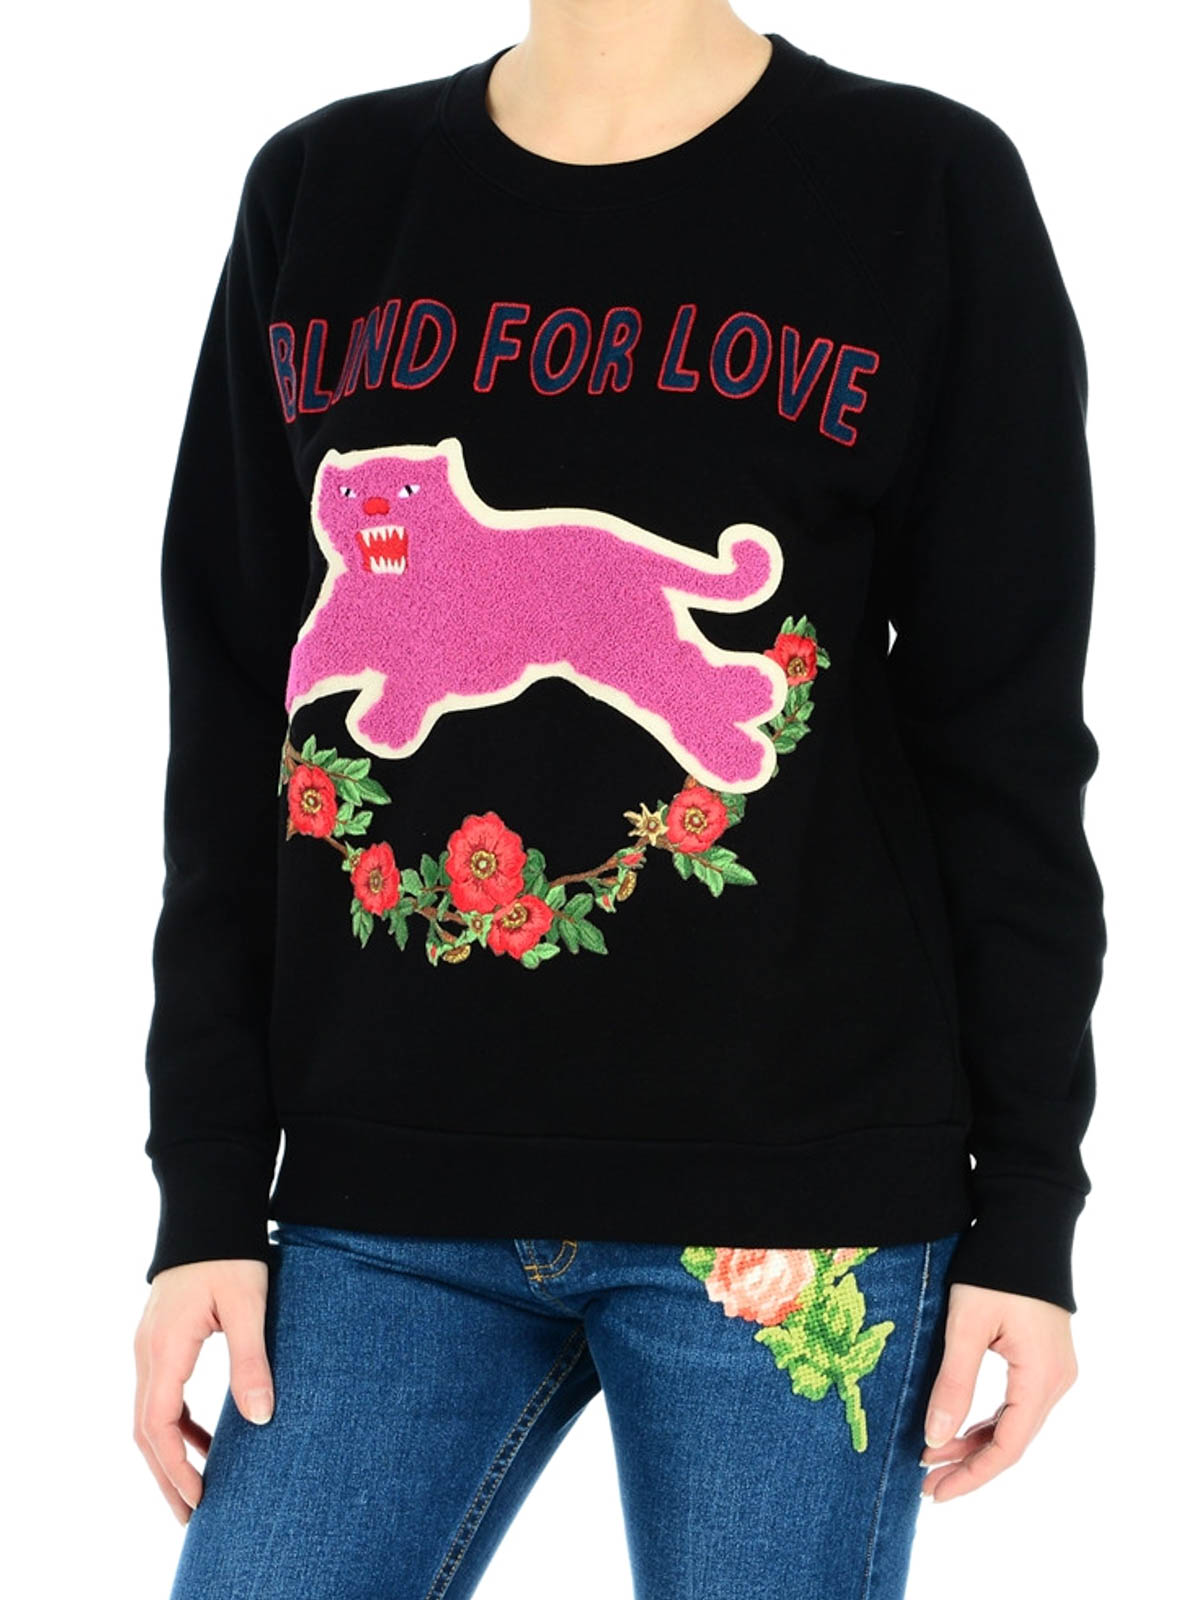 Gucci - Blind For Love sweatshirt 